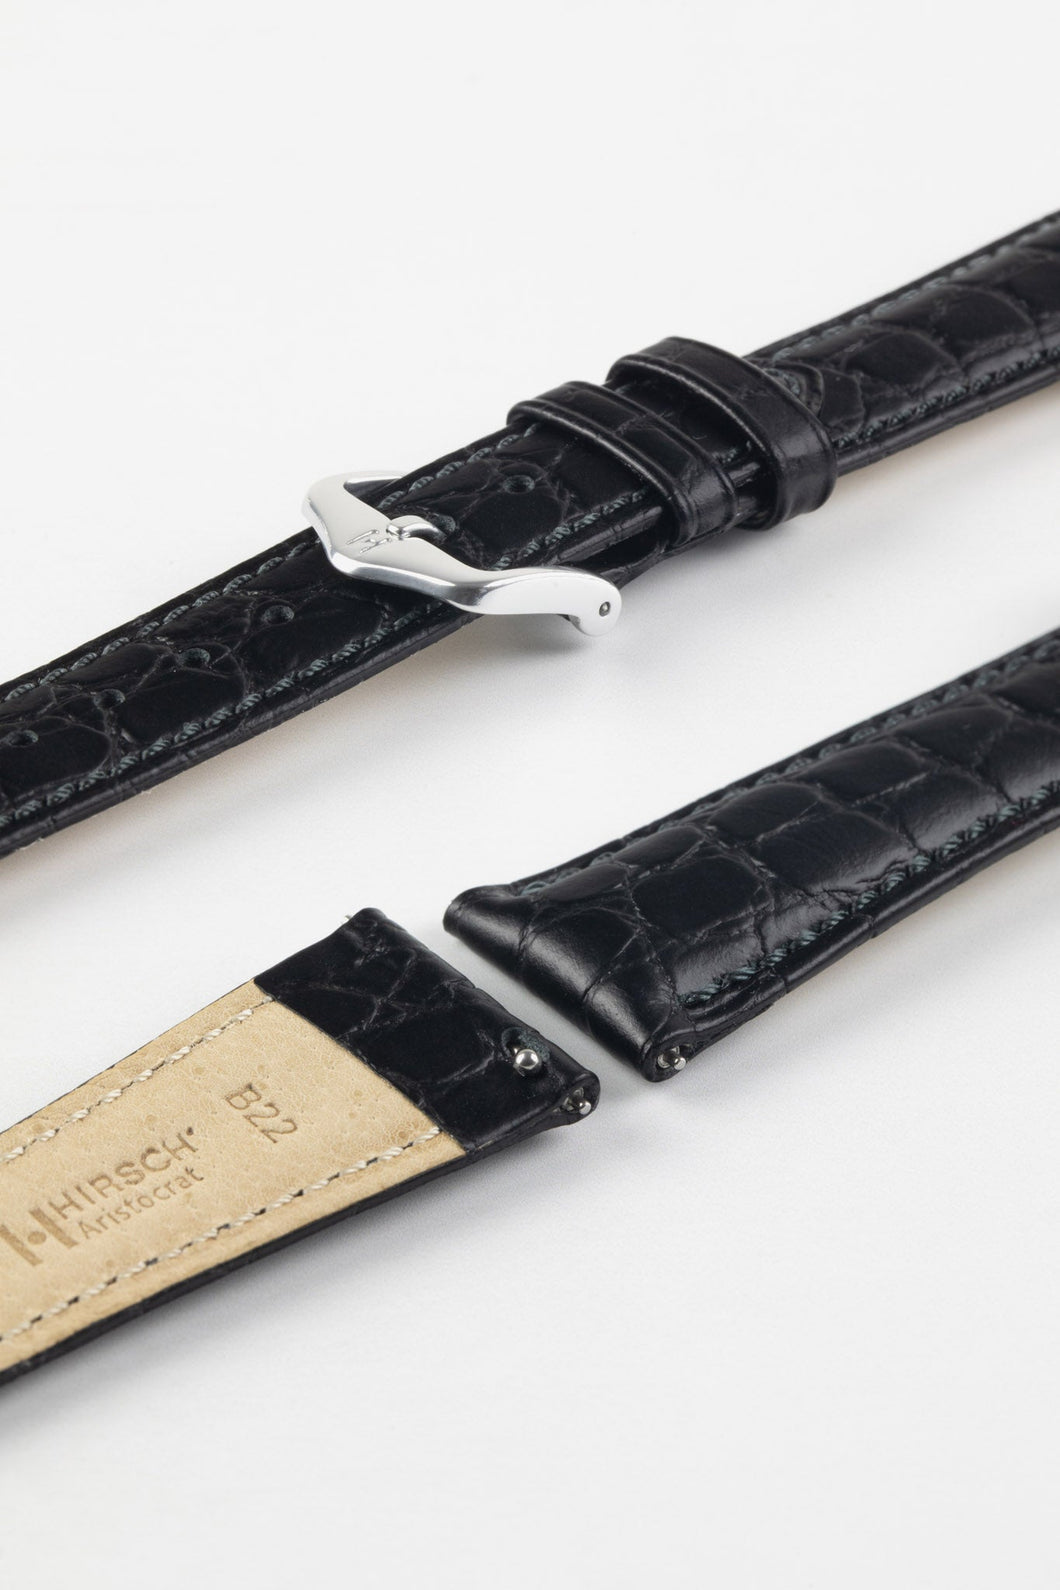 Hirsch ARISTOCRAT Crocodile Embossed Leather Watch Strap BLACK